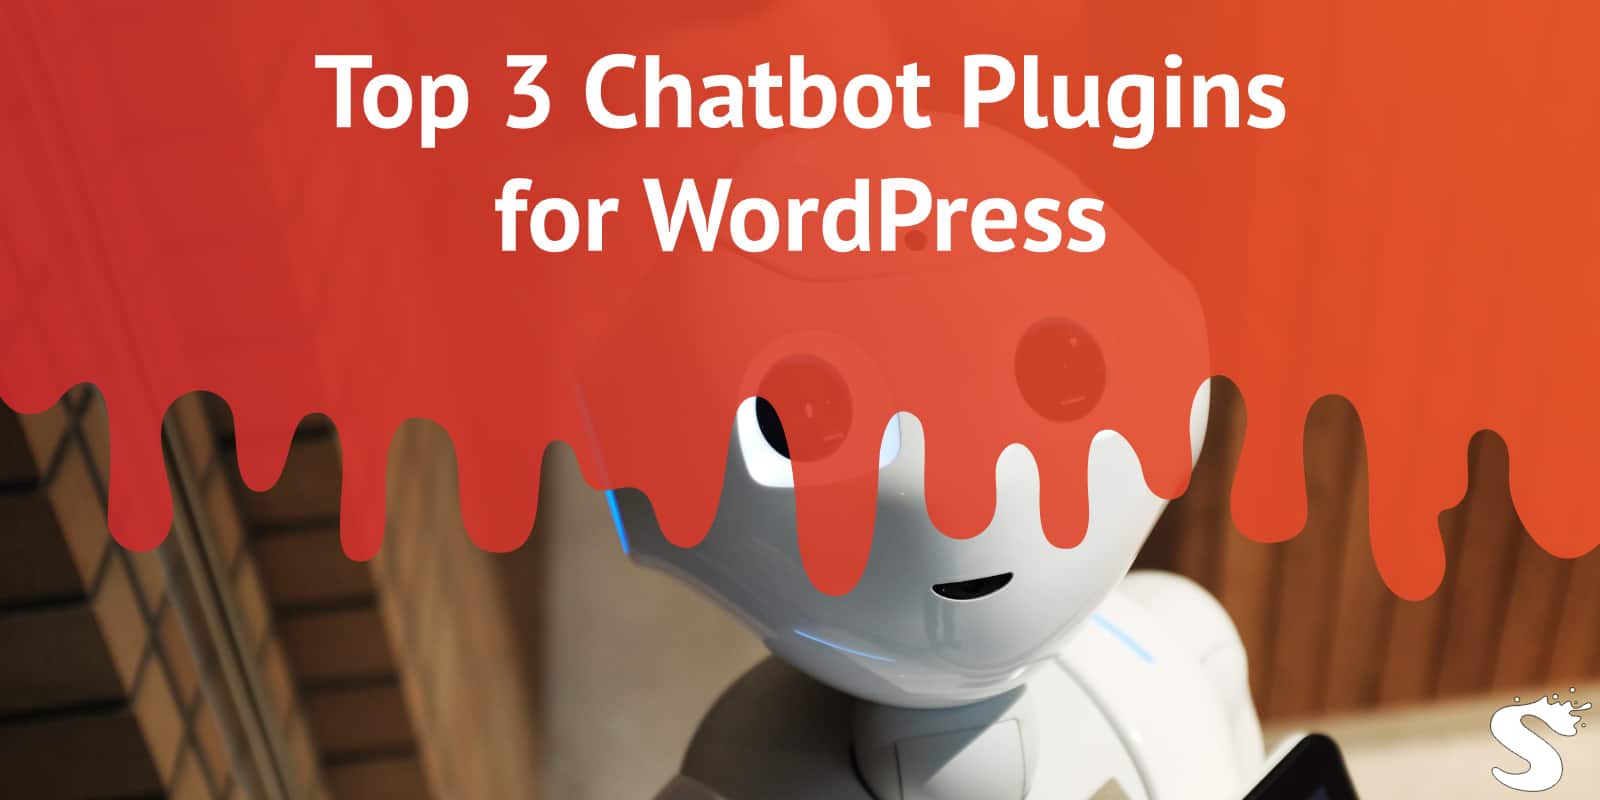 Top 3 Chatbot Plugins for WordPress